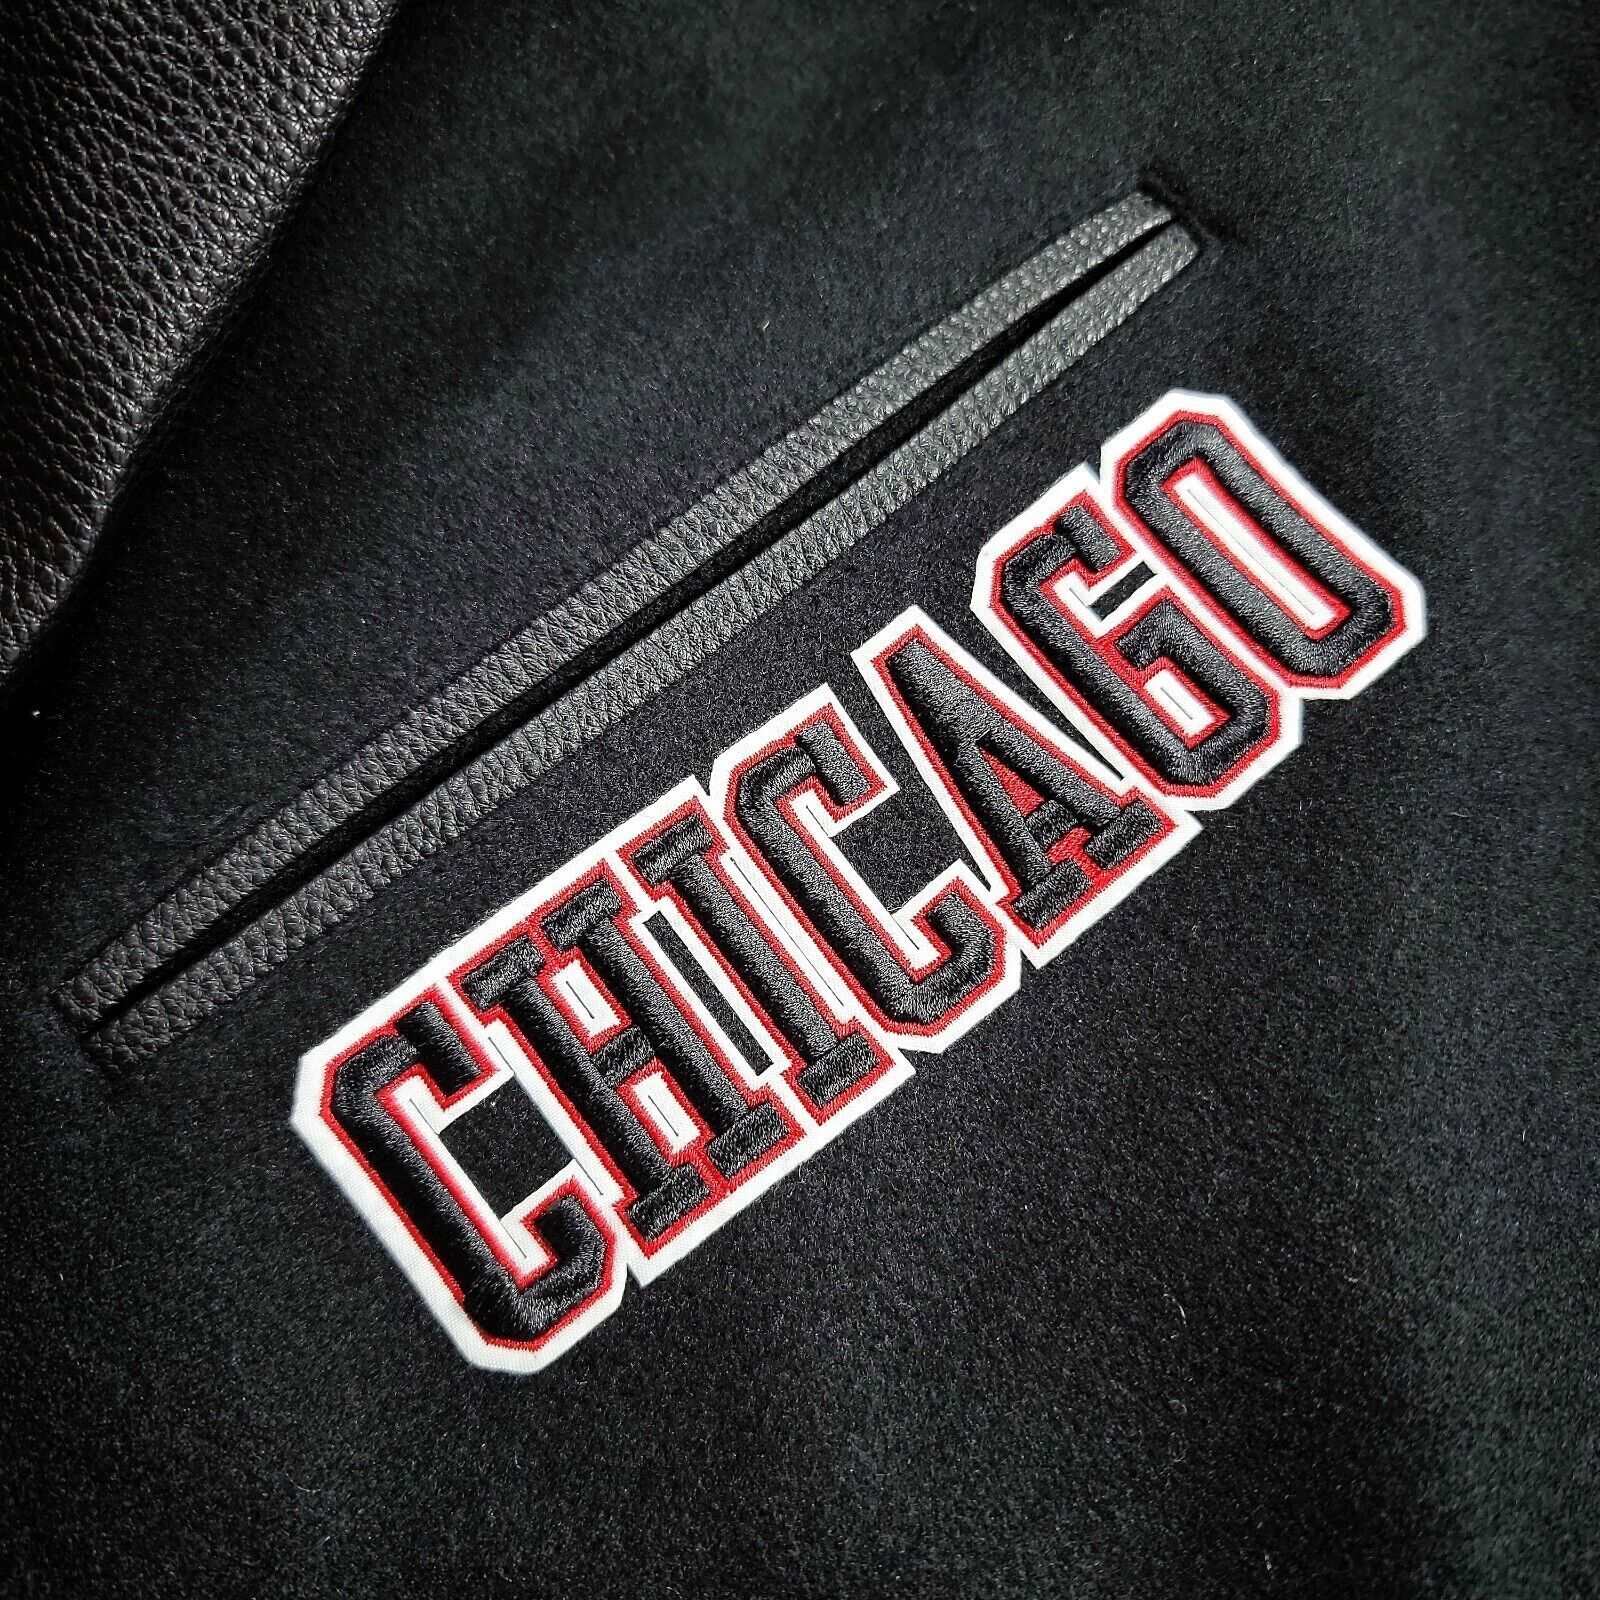 Chicago Bulls Men's Varsity Wool Leather Jacket